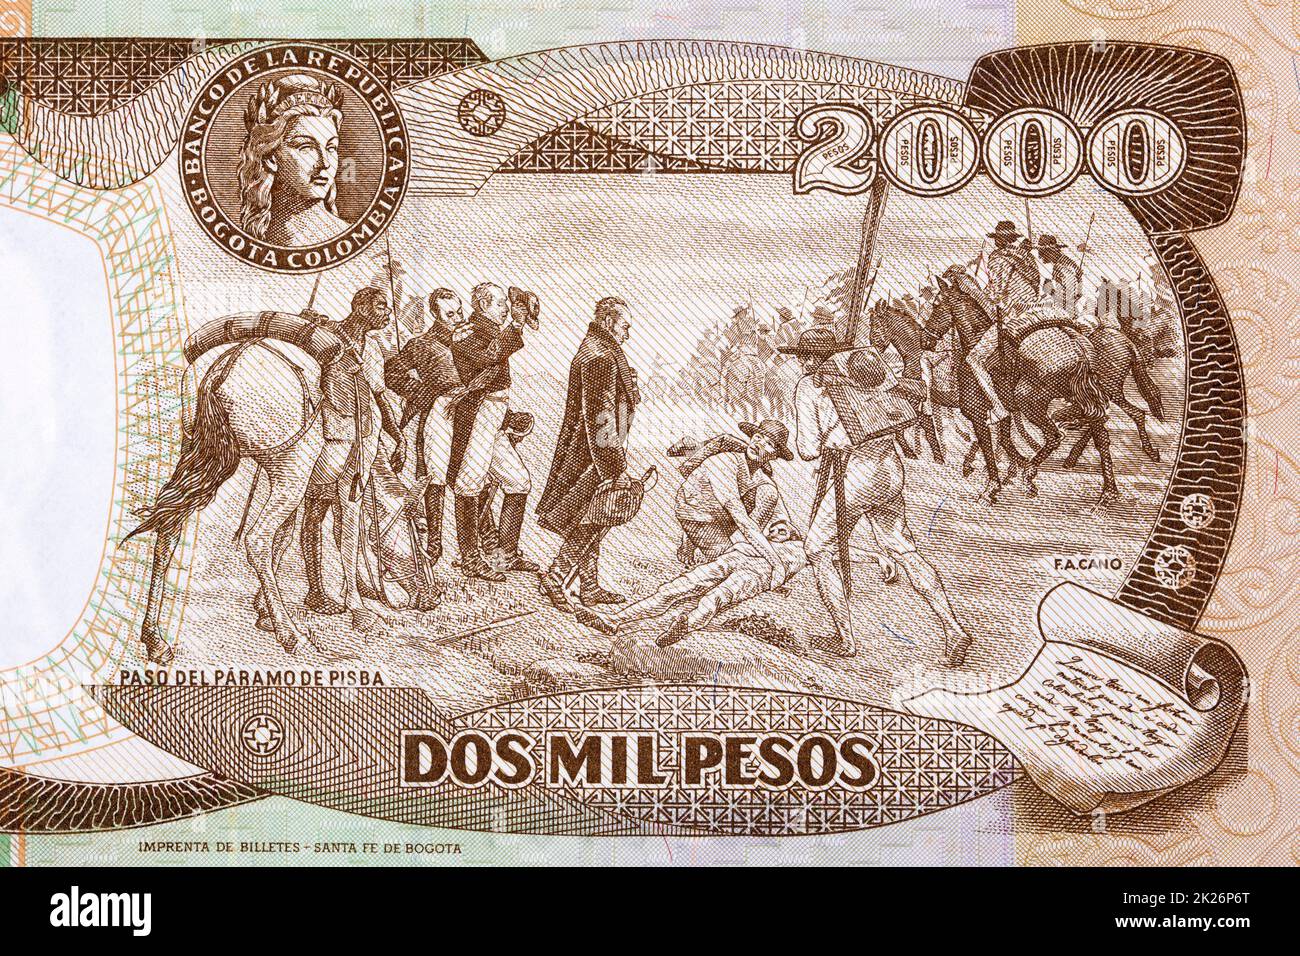 Scene at Paso del Paramo de Pisba from old Colombian money Stock Photo